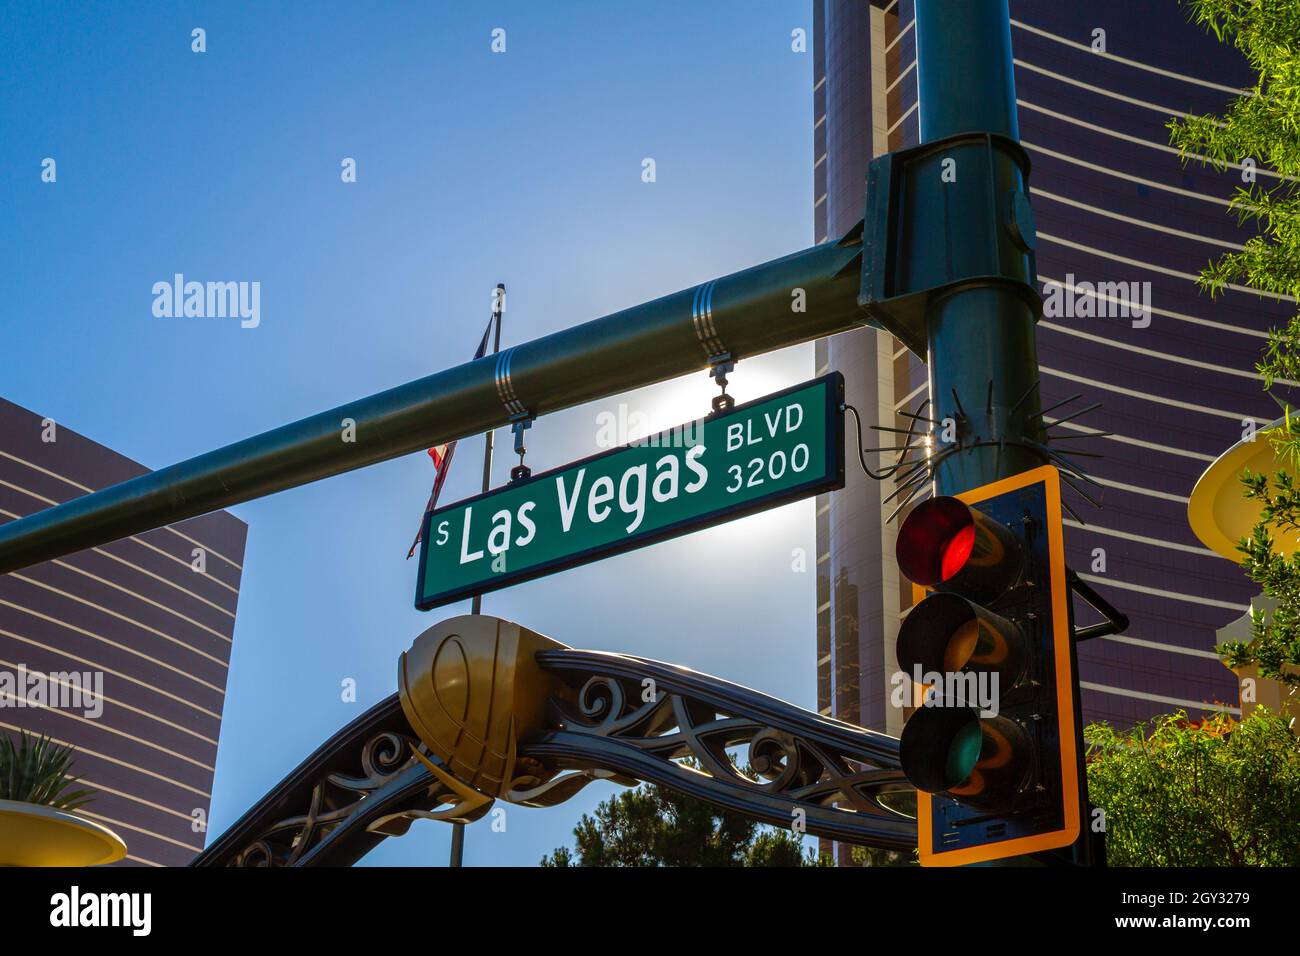 Las Vegas, NV, USA – 8. Juni 2021: Grünes Straßenschild am Las Vegas Boulevard mit dem Wynn Hotel and Casino Gebäude im Hintergrund in Las Vega Stockfoto